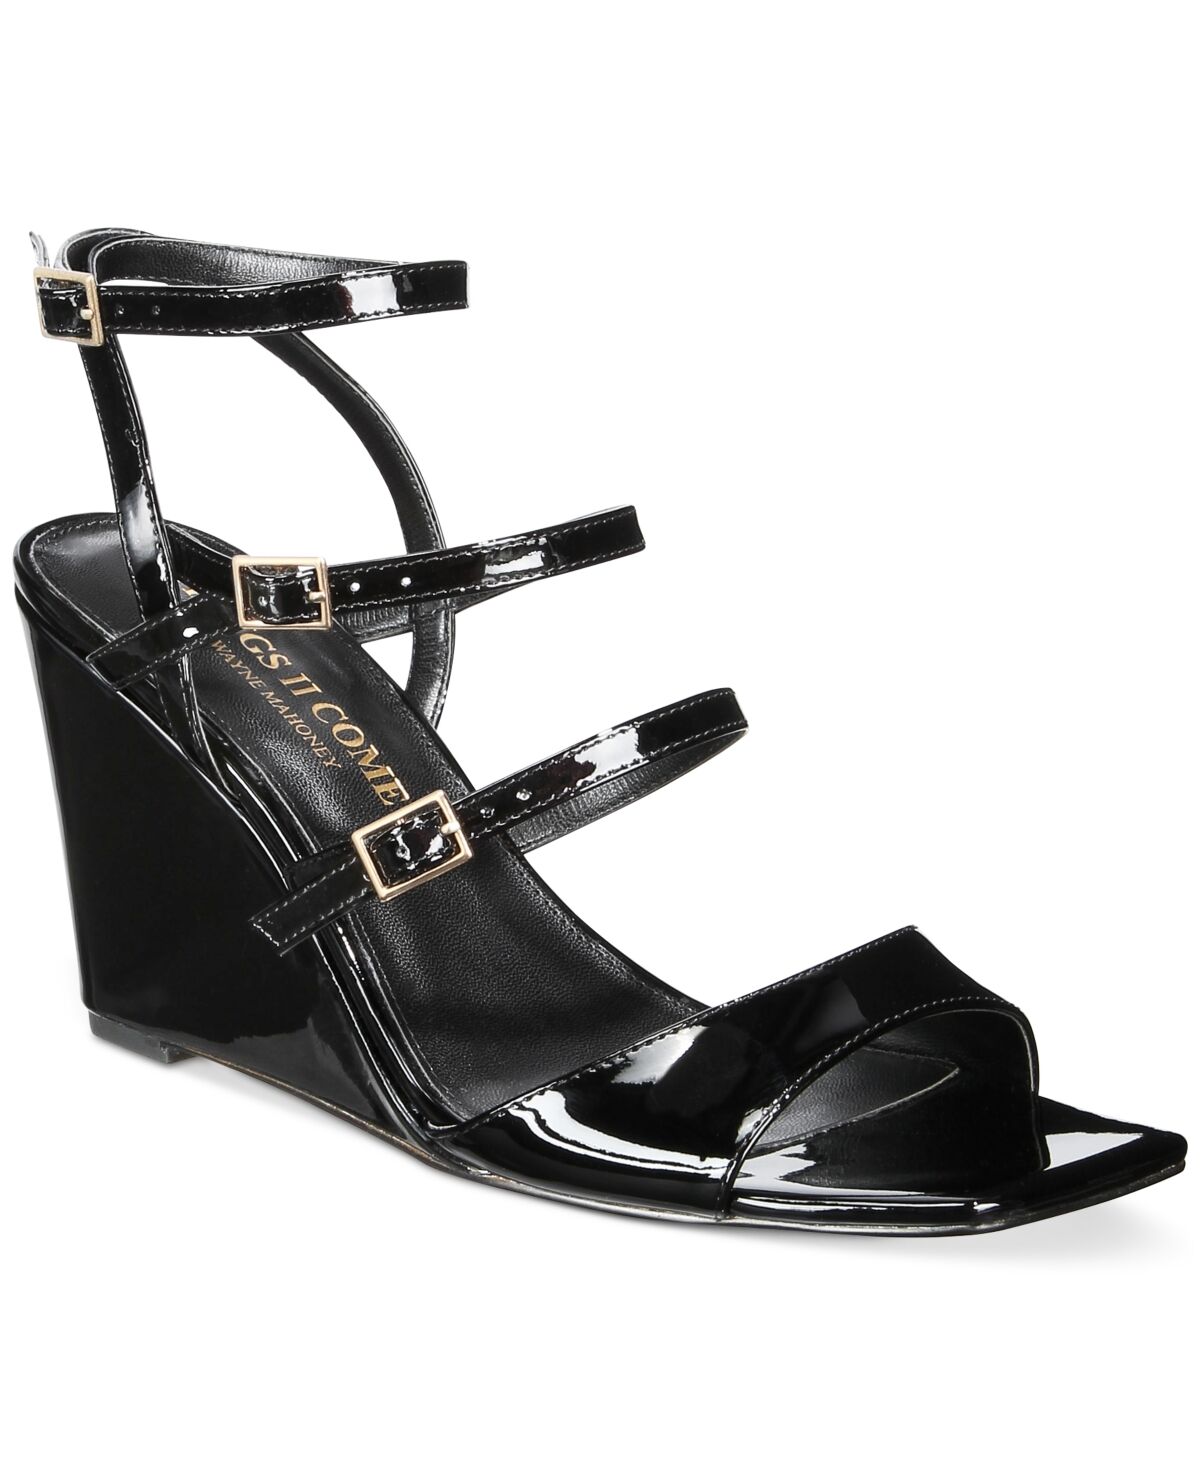 Things Ii Come Women's Andie Luxurious Dress Gladiator Wedge Sandals - Black